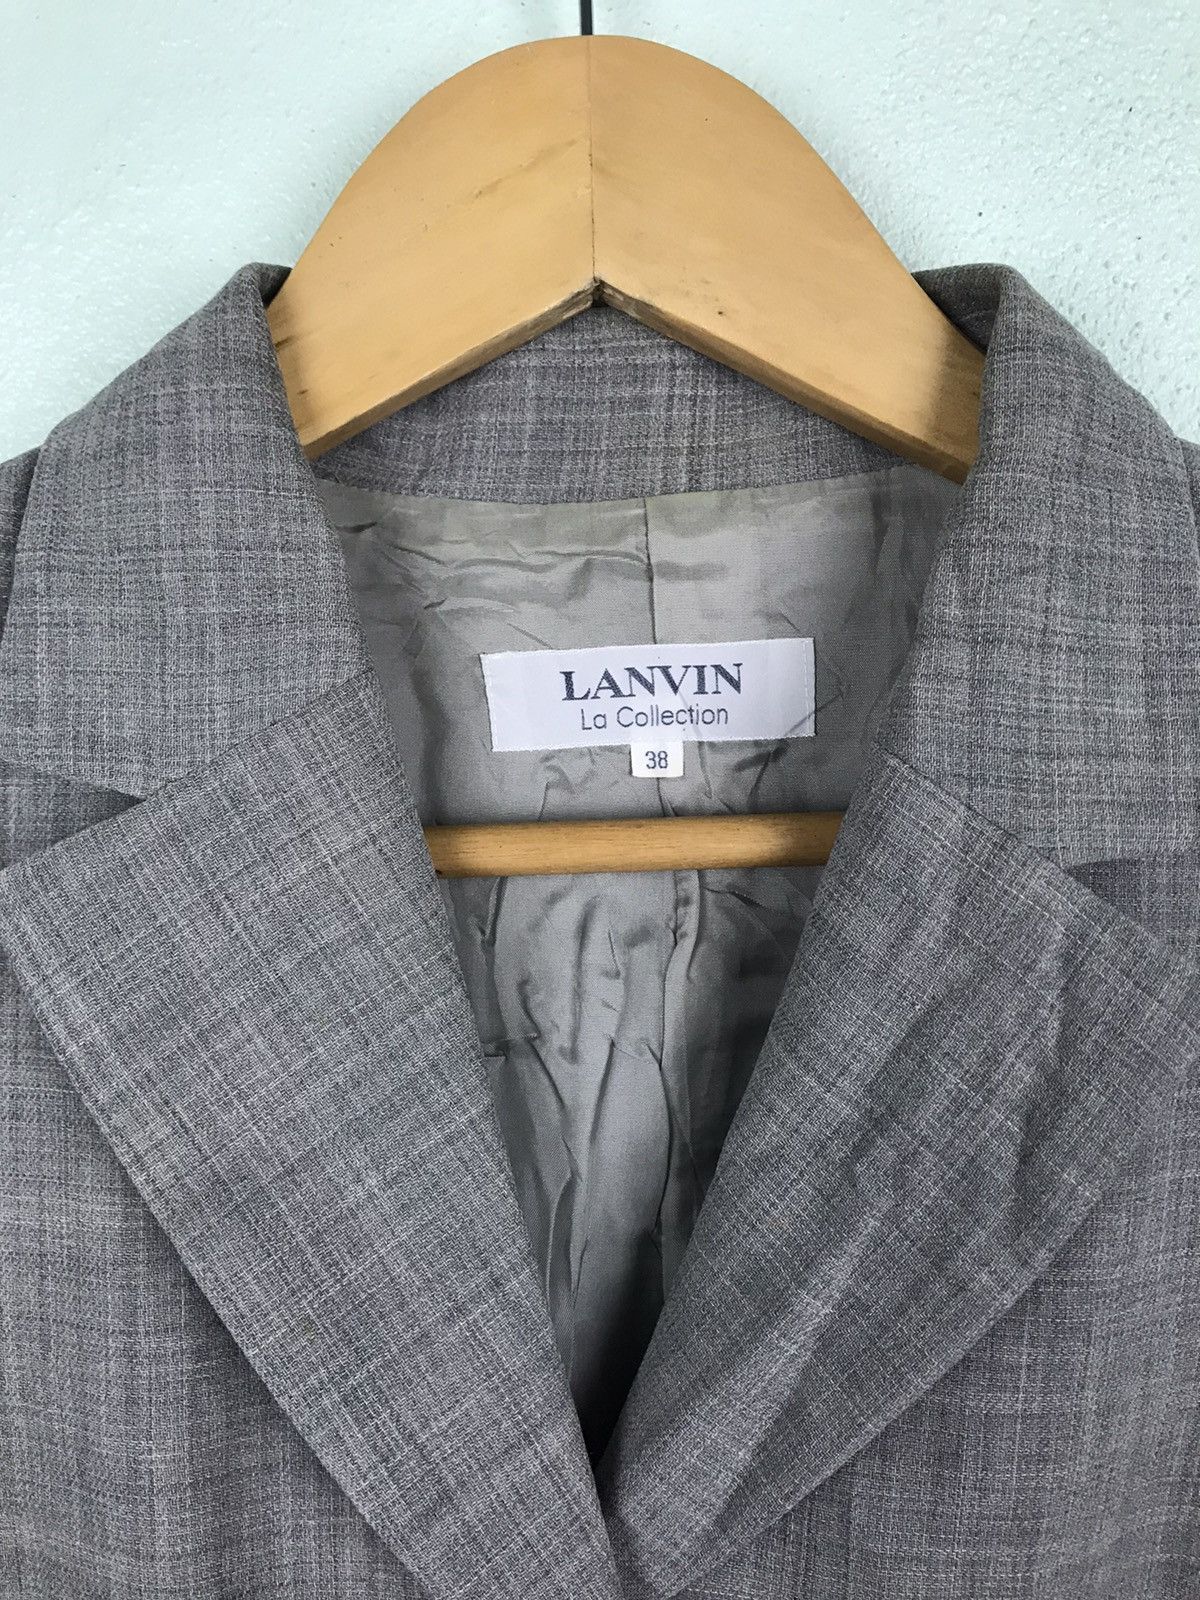 Lanvin la collection wool blazers jacket - gh1319 - 2